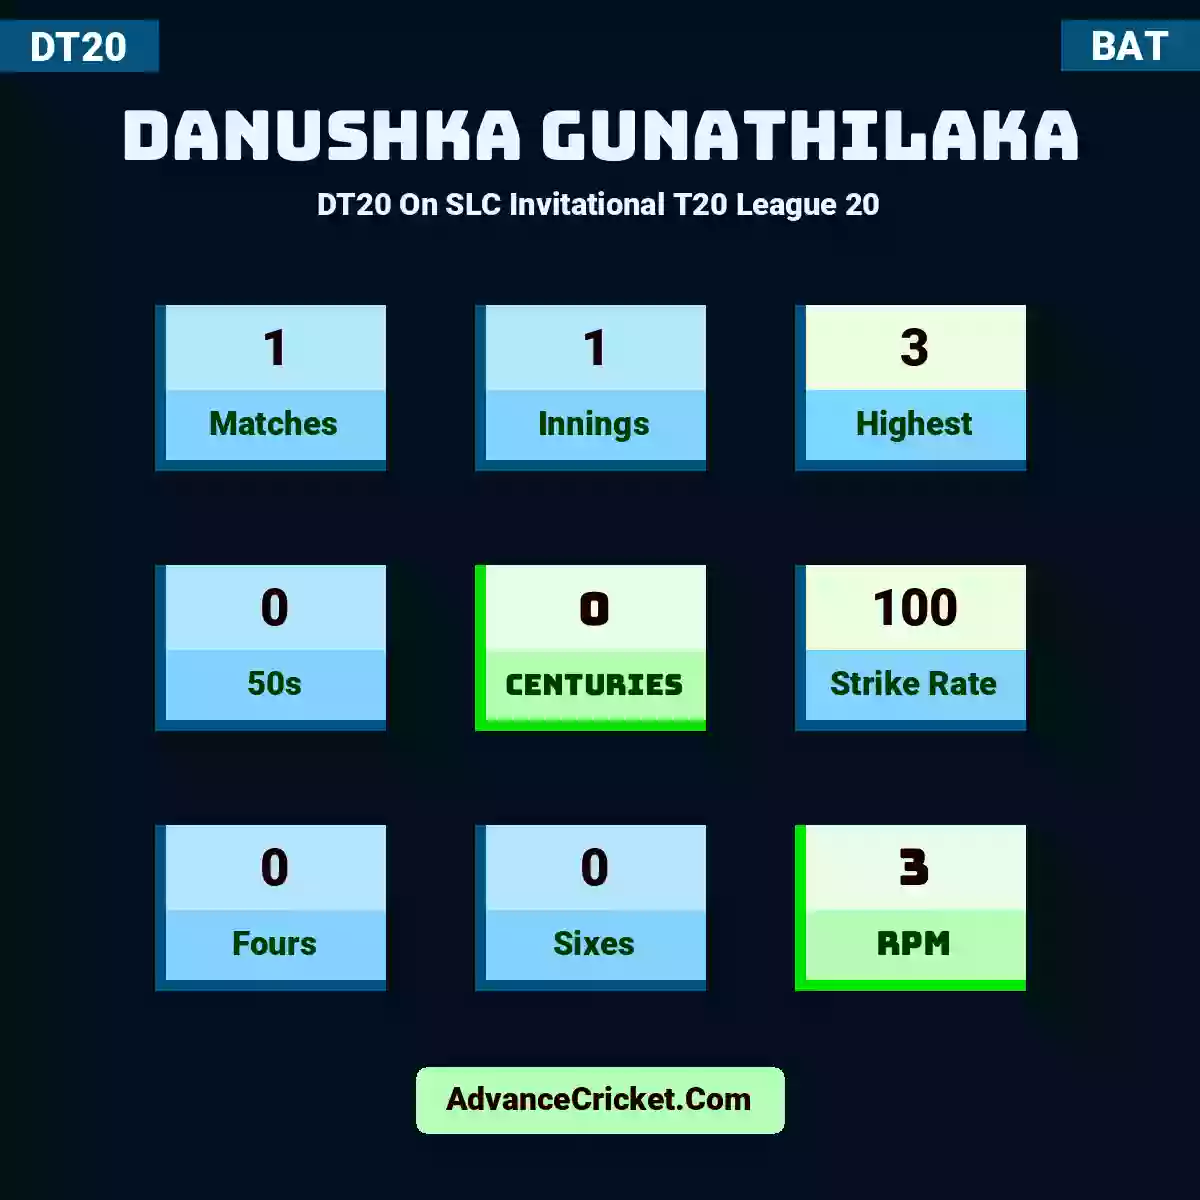 Danushka Gunathilaka DT20  On SLC Invitational T20 League 20, Danushka Gunathilaka played 1 matches, scored 3 runs as highest, 0 half-centuries, and 0 centuries, with a strike rate of 100. D.Gunathilaka hit 0 fours and 0 sixes, with an RPM of 3.